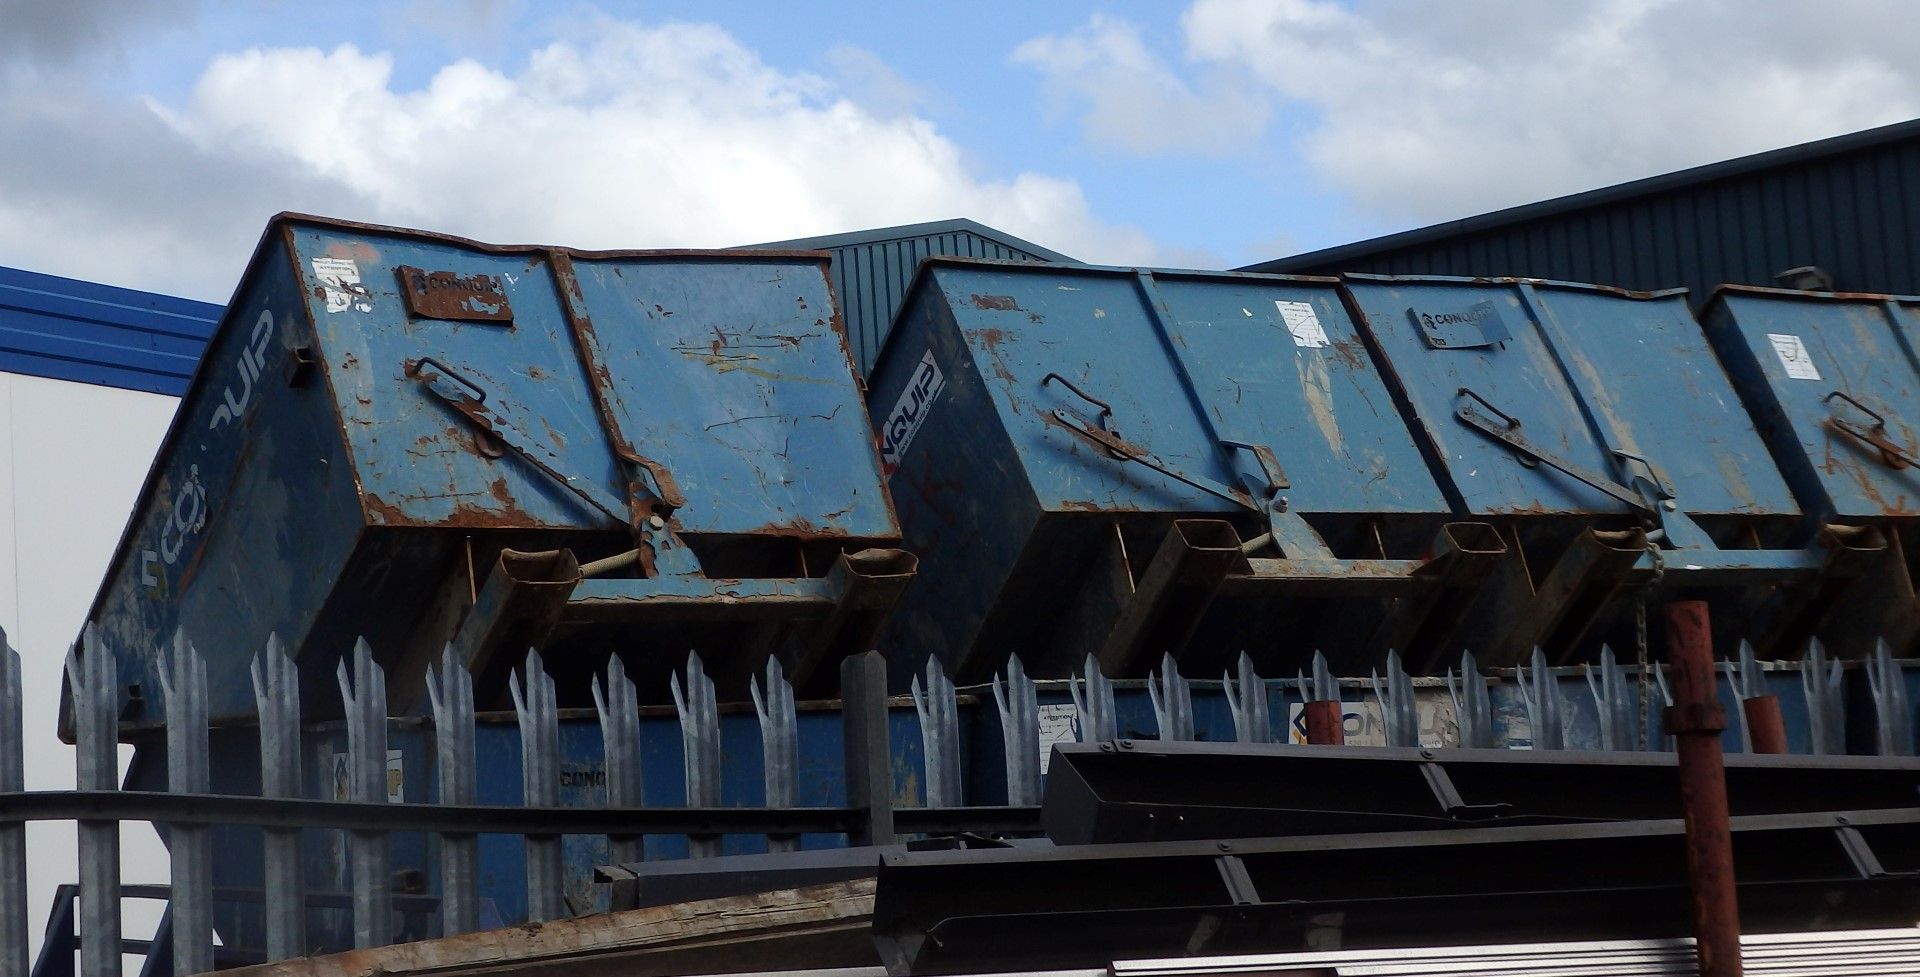 1 x Conquip Forklift Blue Skip Tipper - Heavy Duty - CL057 - Location: Welwyn, Hertfordshire, AL7 - Image 3 of 3